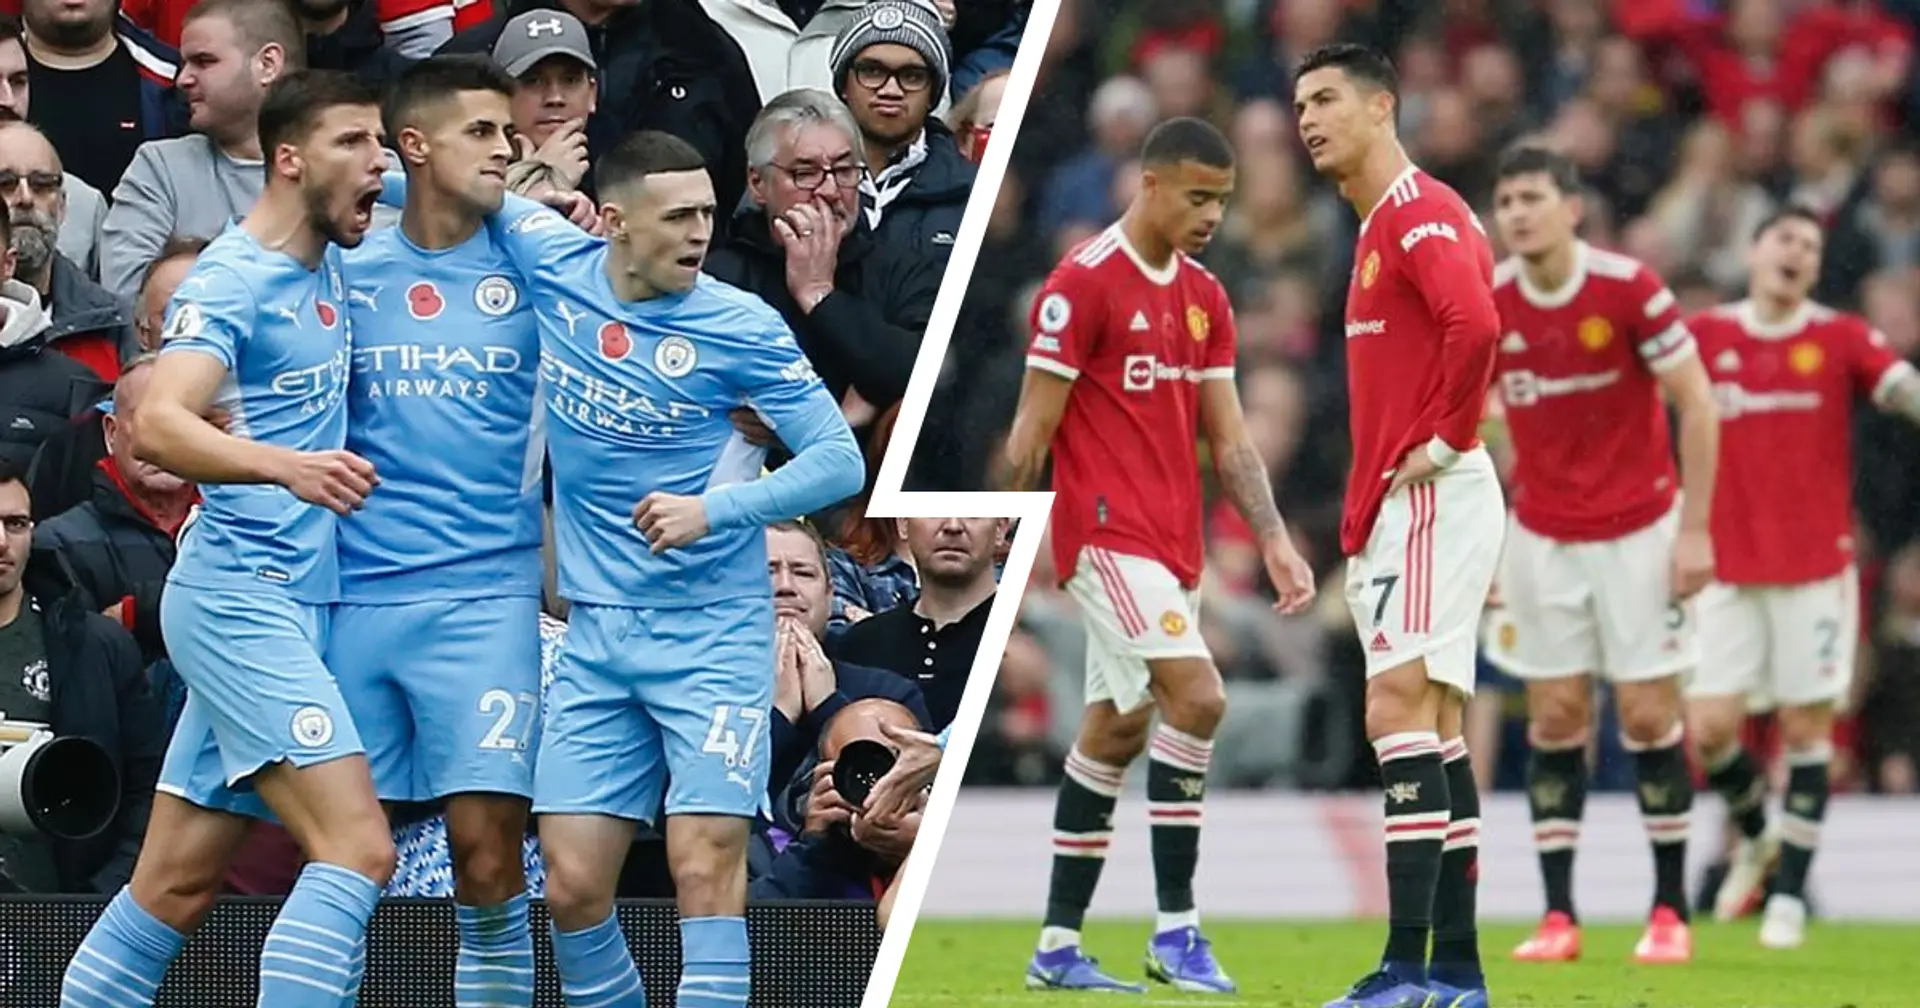 Rating Man United performance vs Man City based on 4 key factors